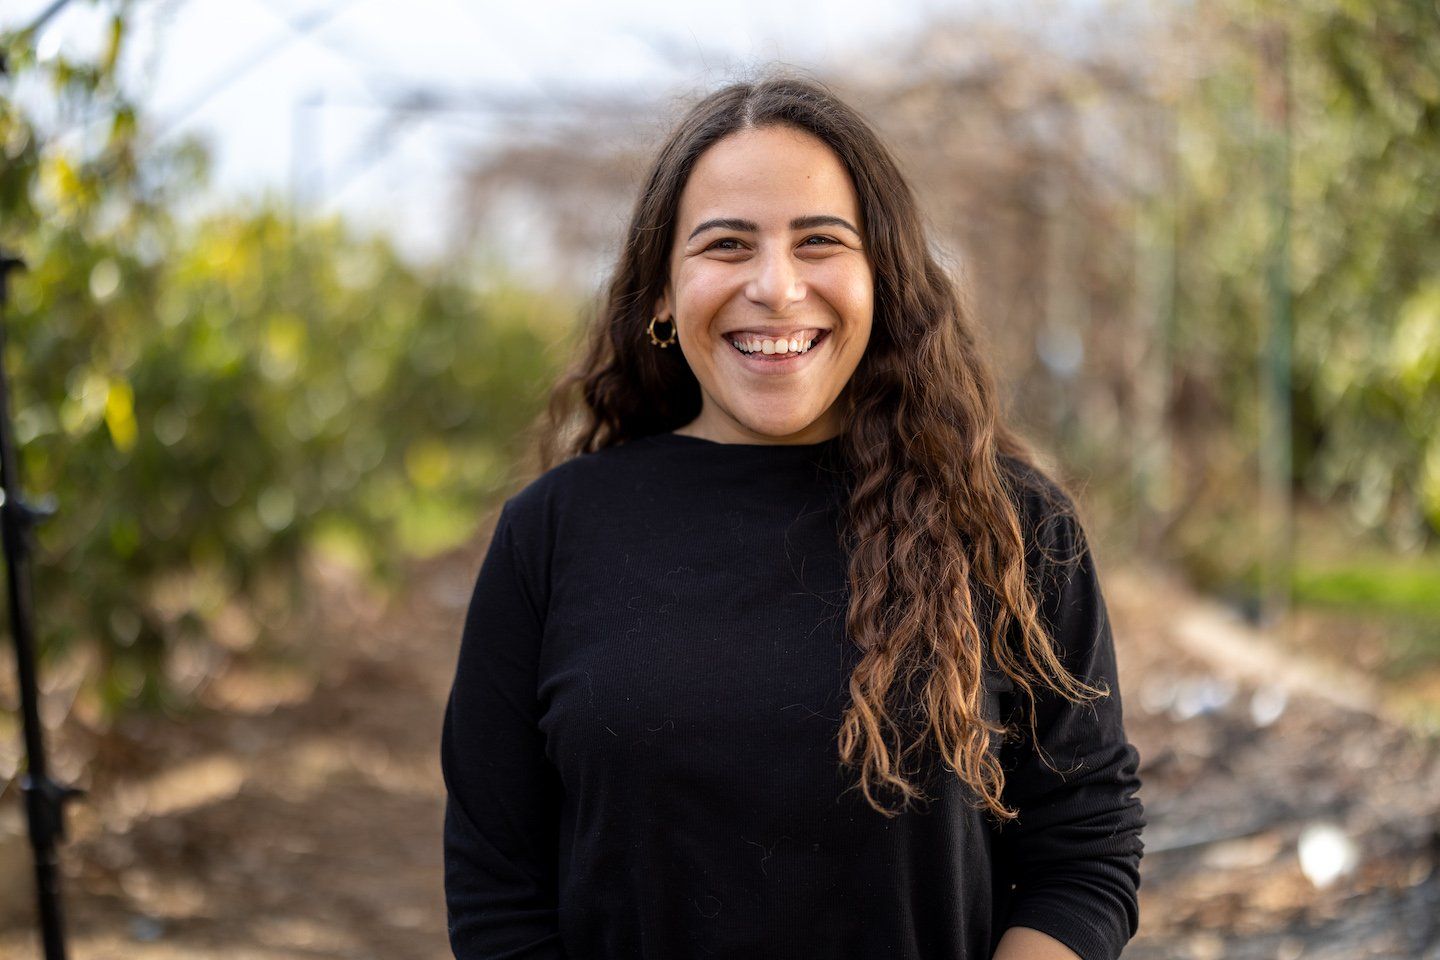 Farah Emara from Egypt, founder of FreshSource